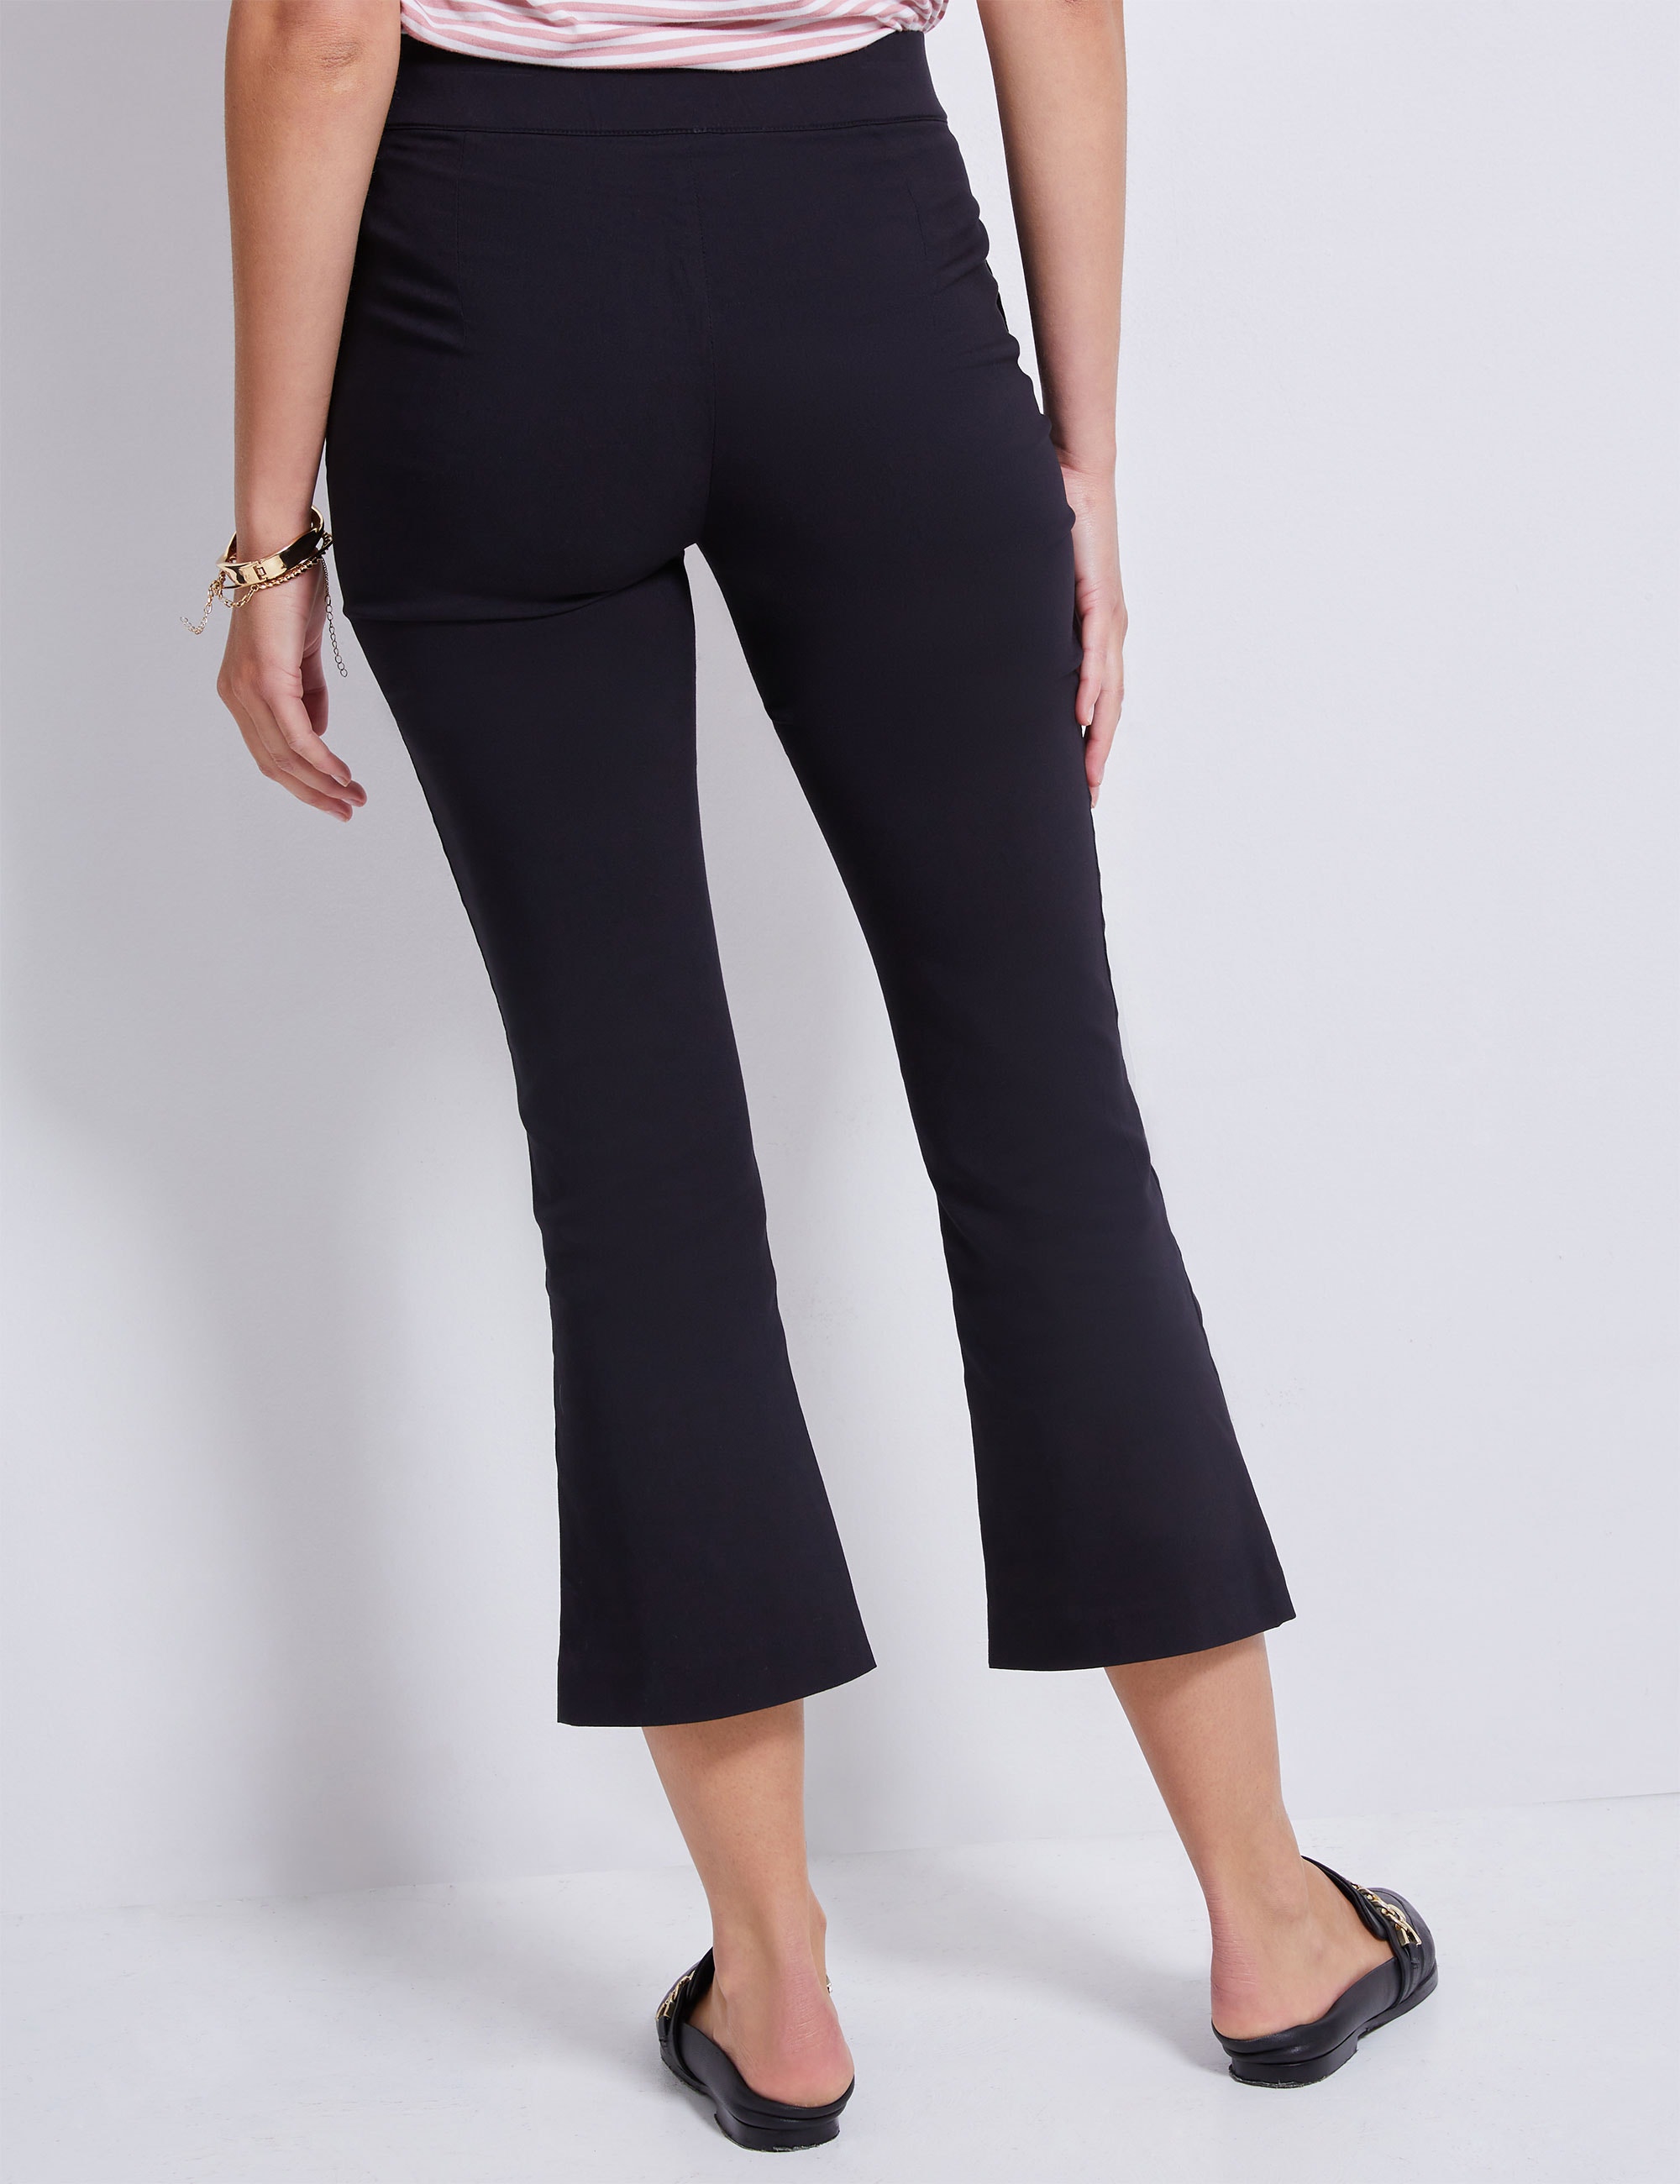 Katies - Womens Pants - Black - Classic Pant - Capri - Knee Length